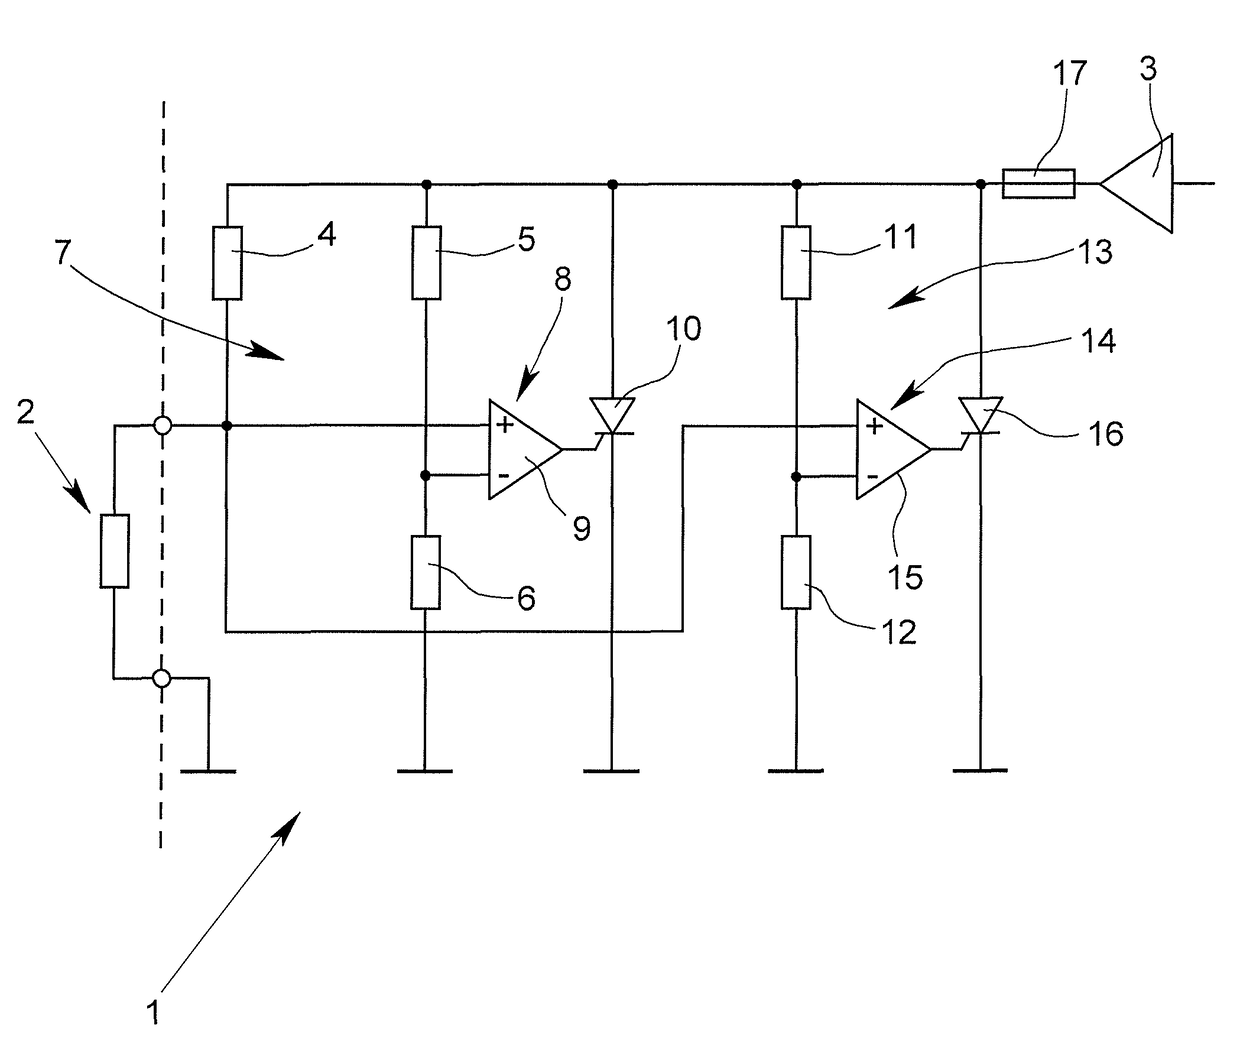 Circuit arrangement for monitoring temperature and calorimetric mass flowmeter